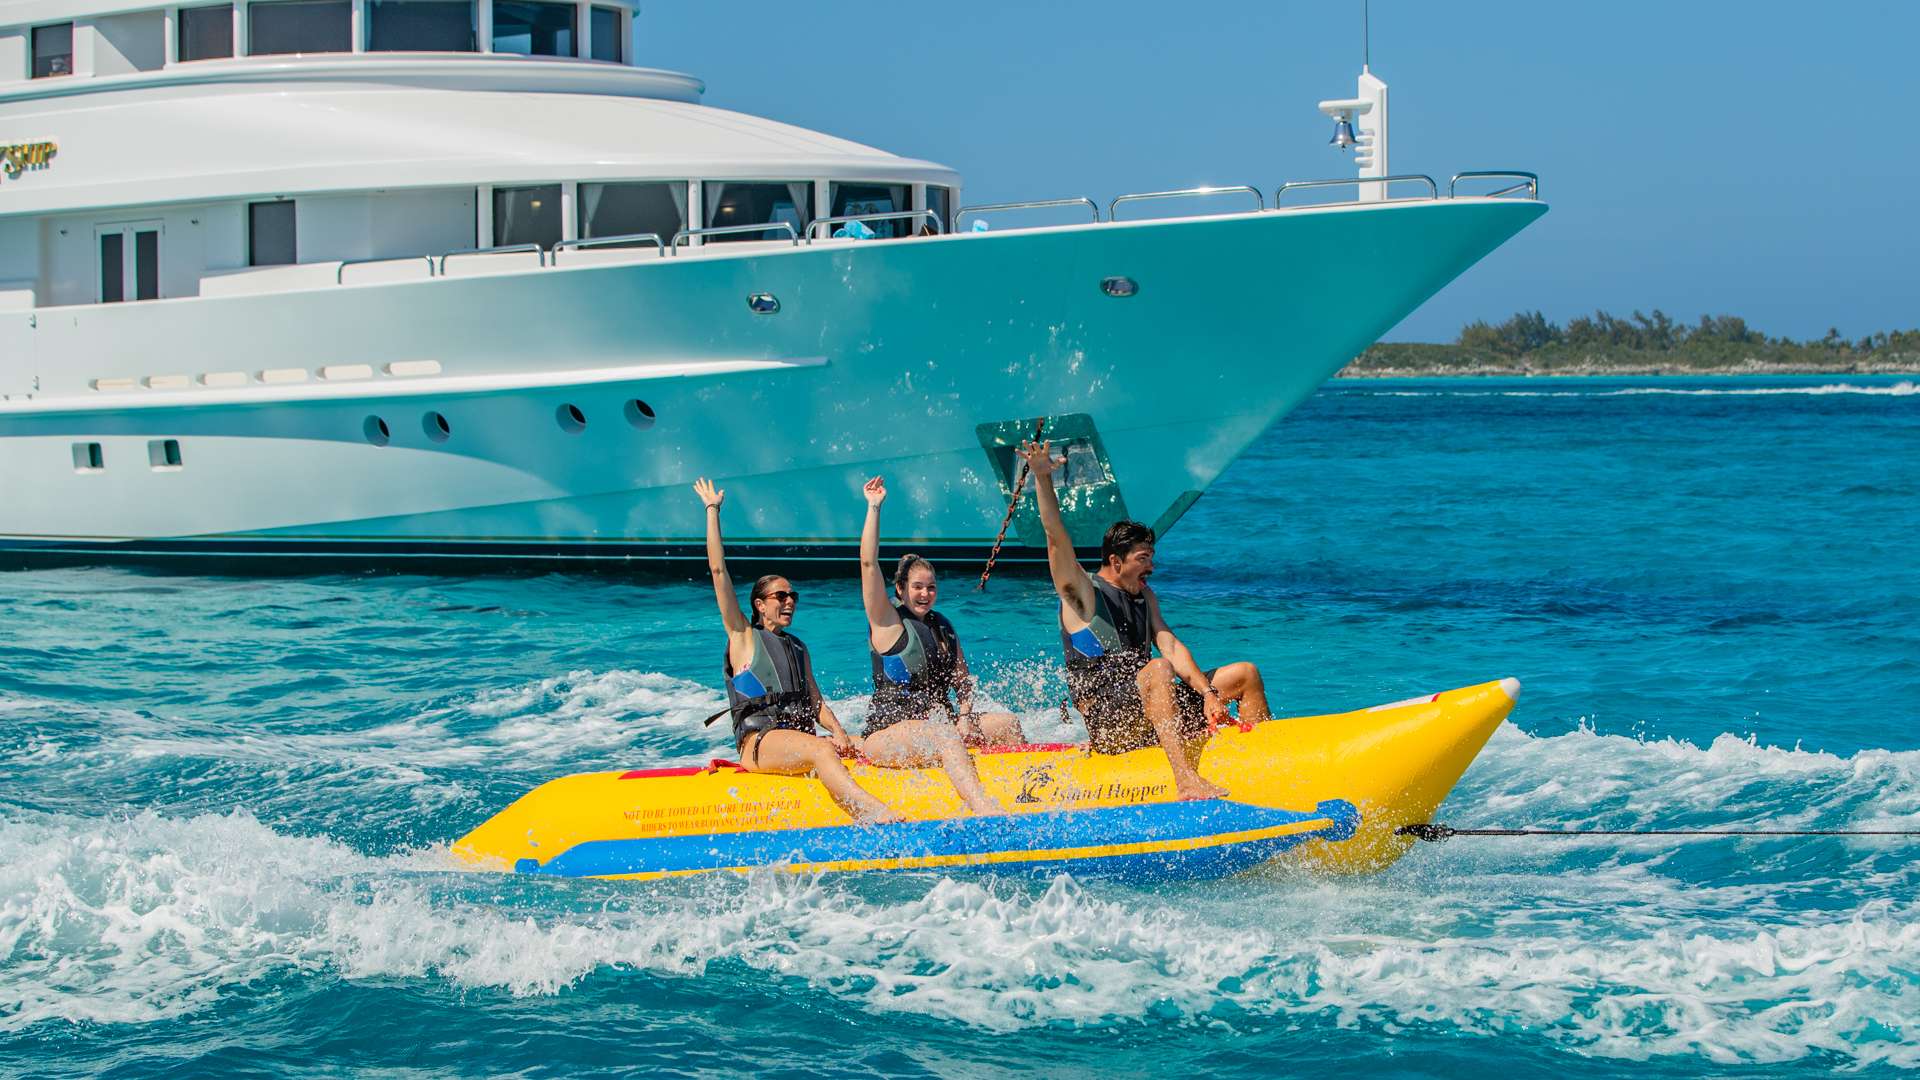 STARSHIP Yacht Charter - Towable Banana